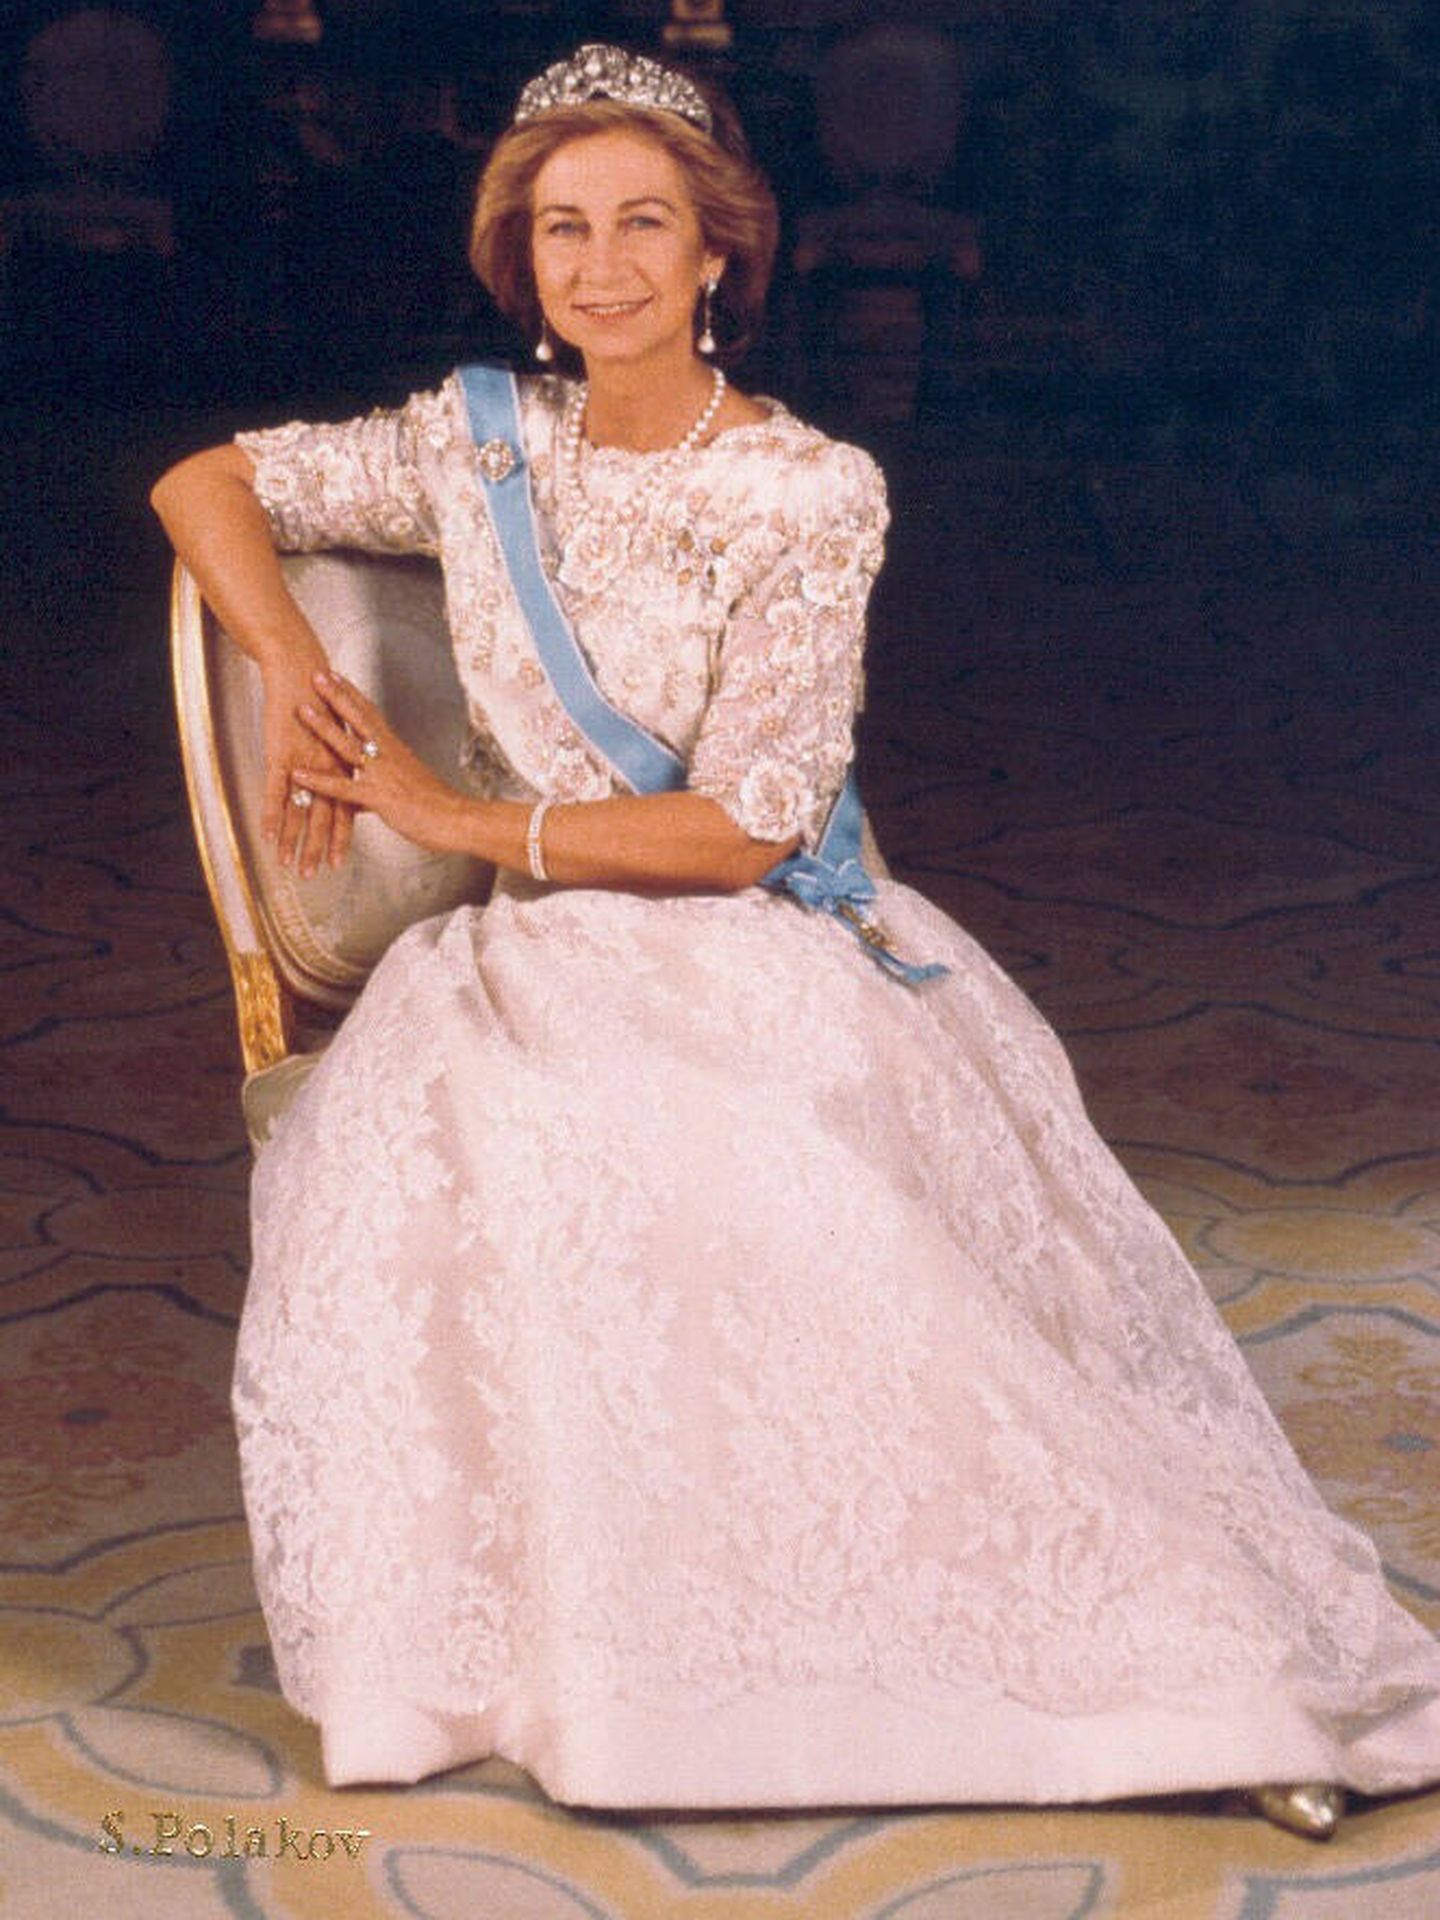 La reina Sofía, retratada por la emblemática fotógrafa. (Casa Real/Sylvia Polakov)